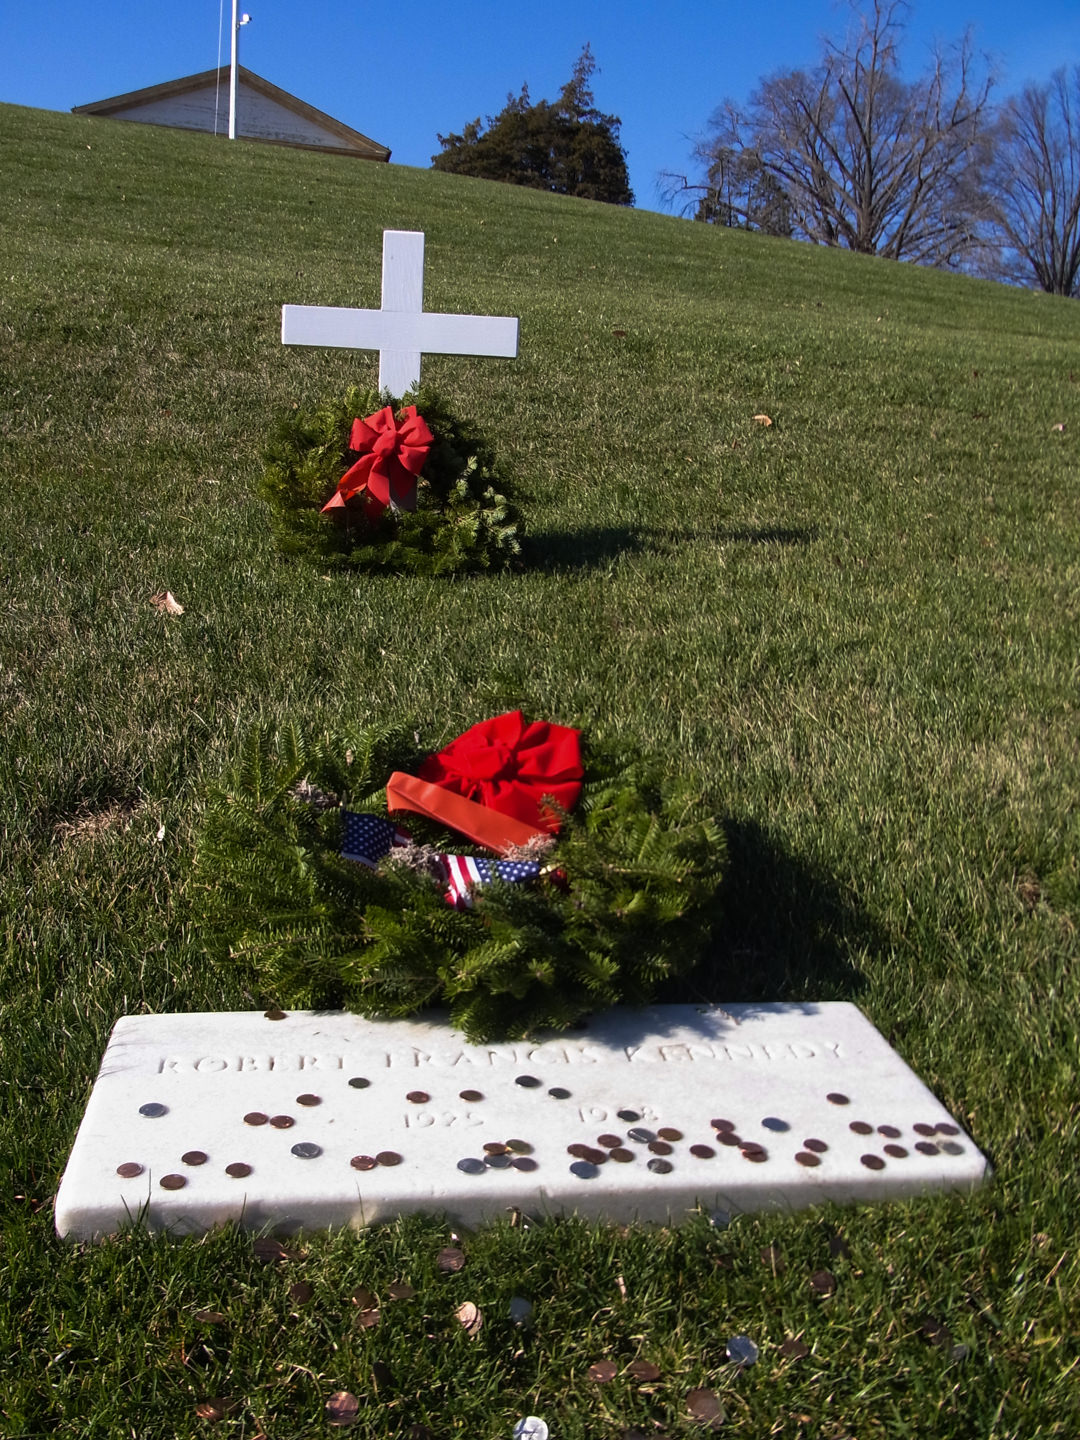 Robert Kennedy's Grave